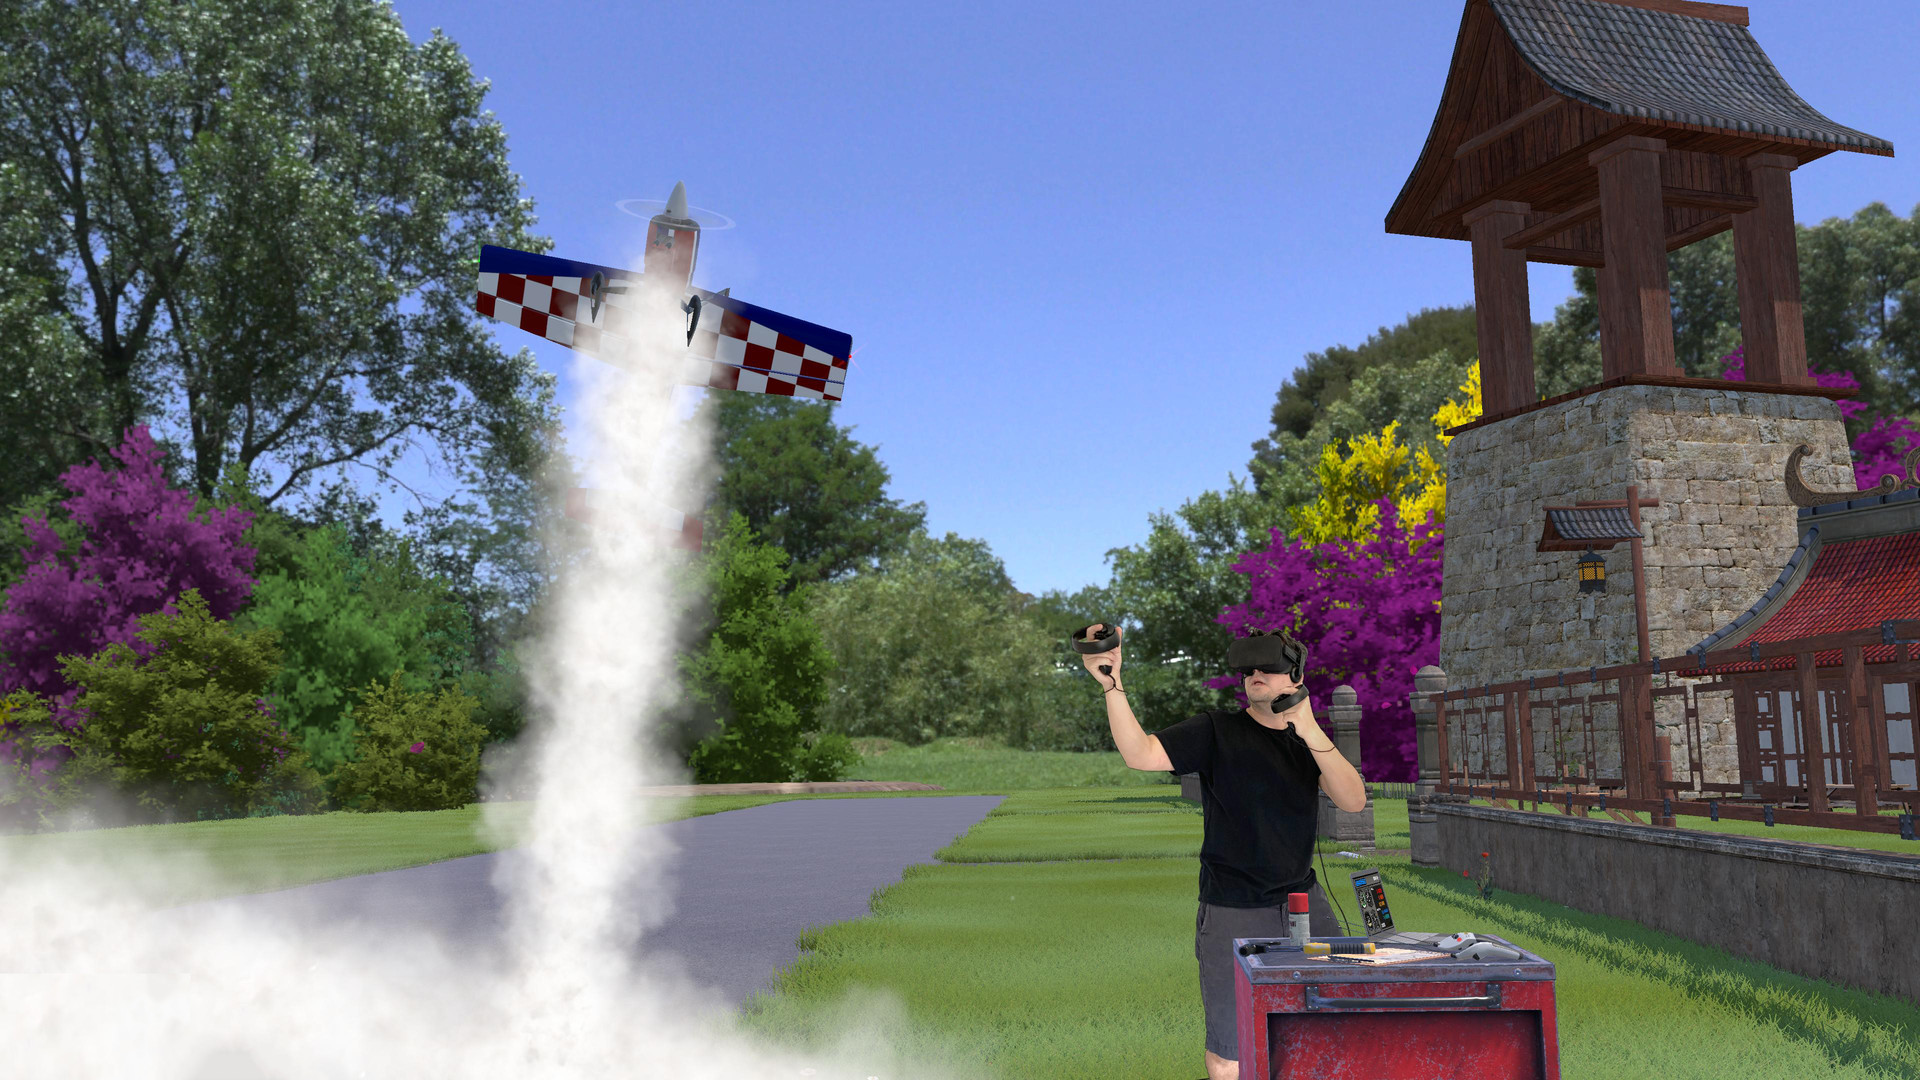 RC Flight Simulator 2020 VR Free Download